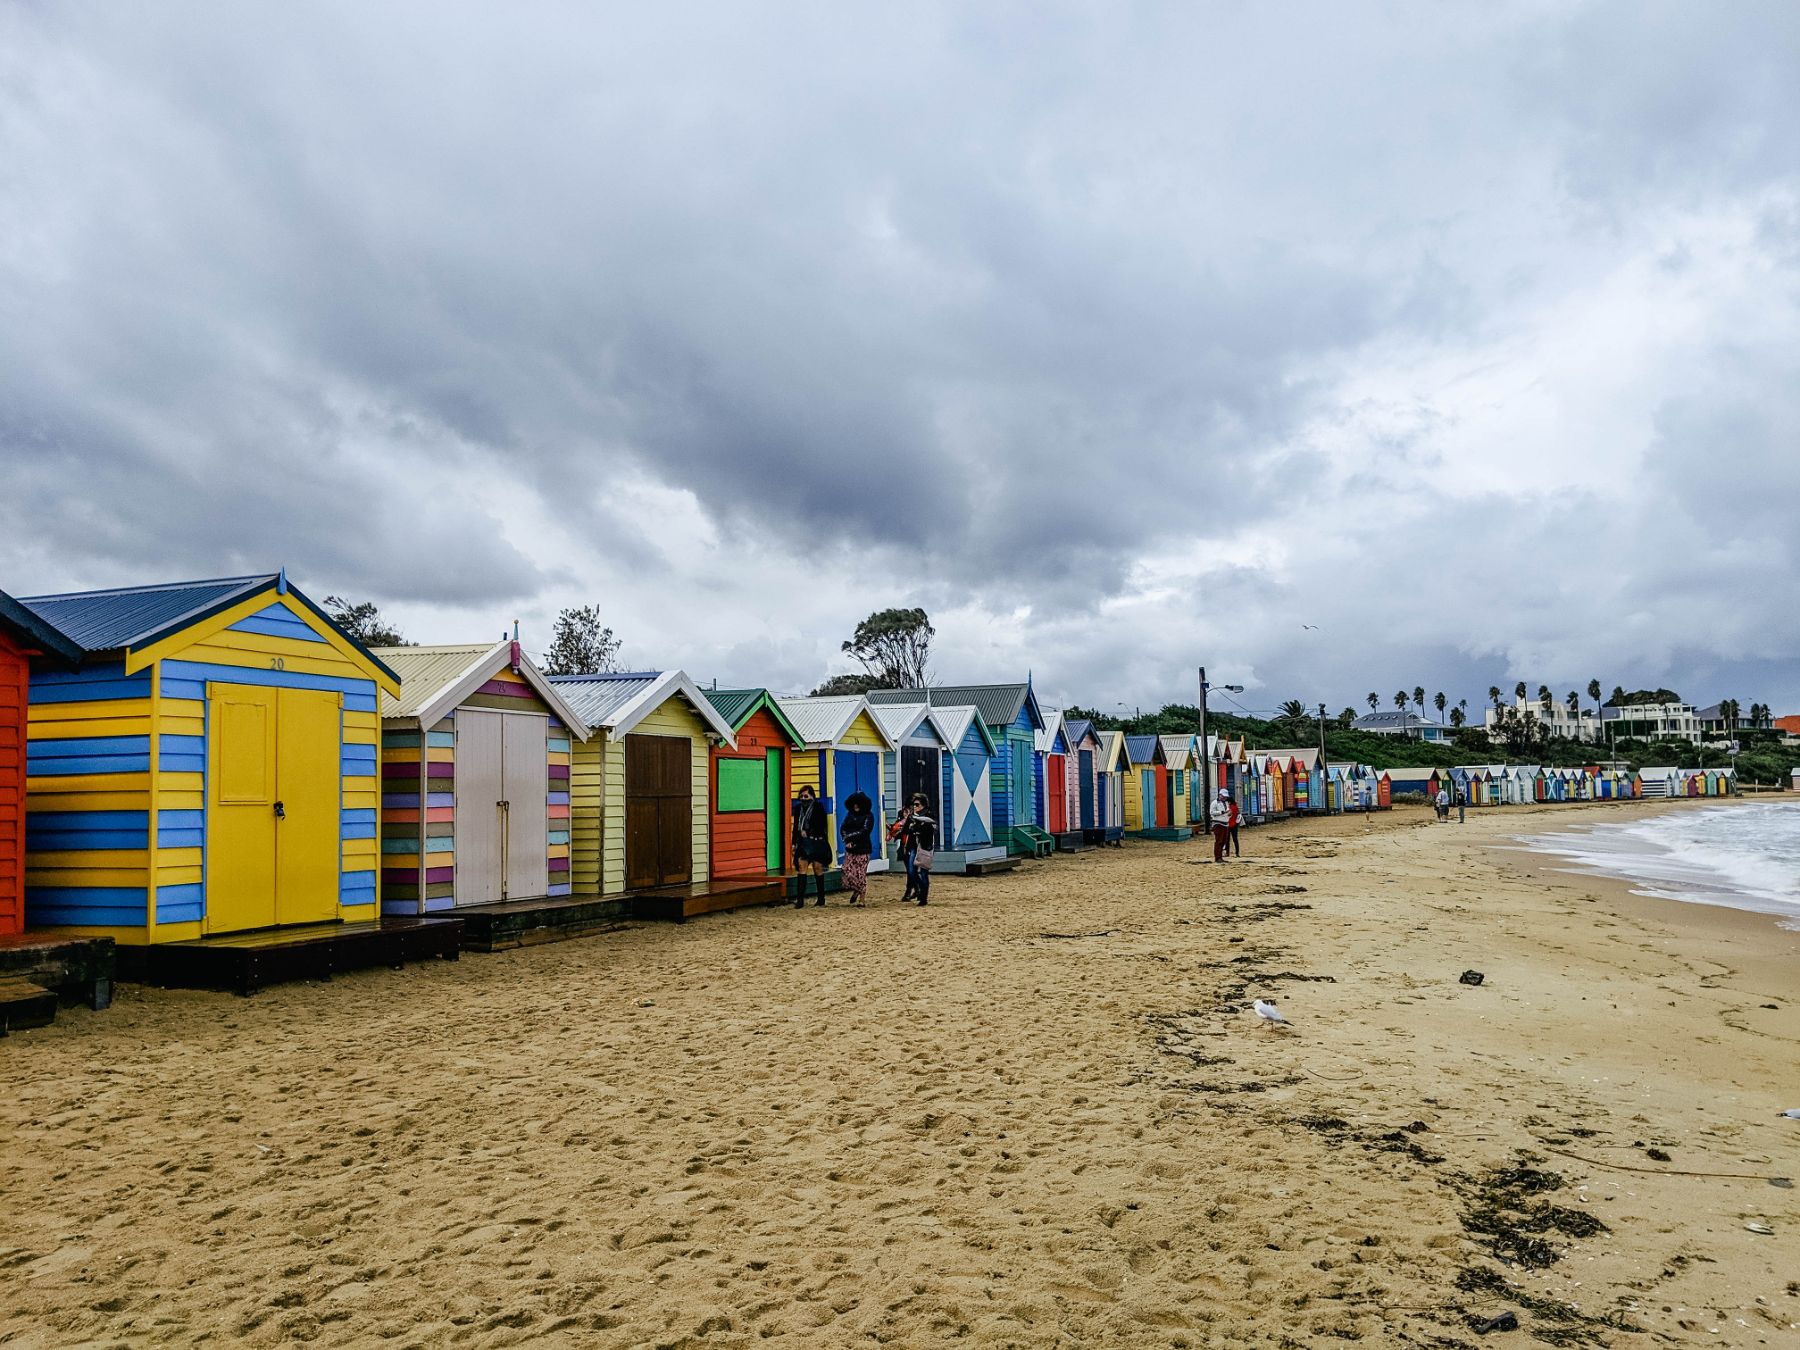 Colourful beach boxes in Melbourne, Australia